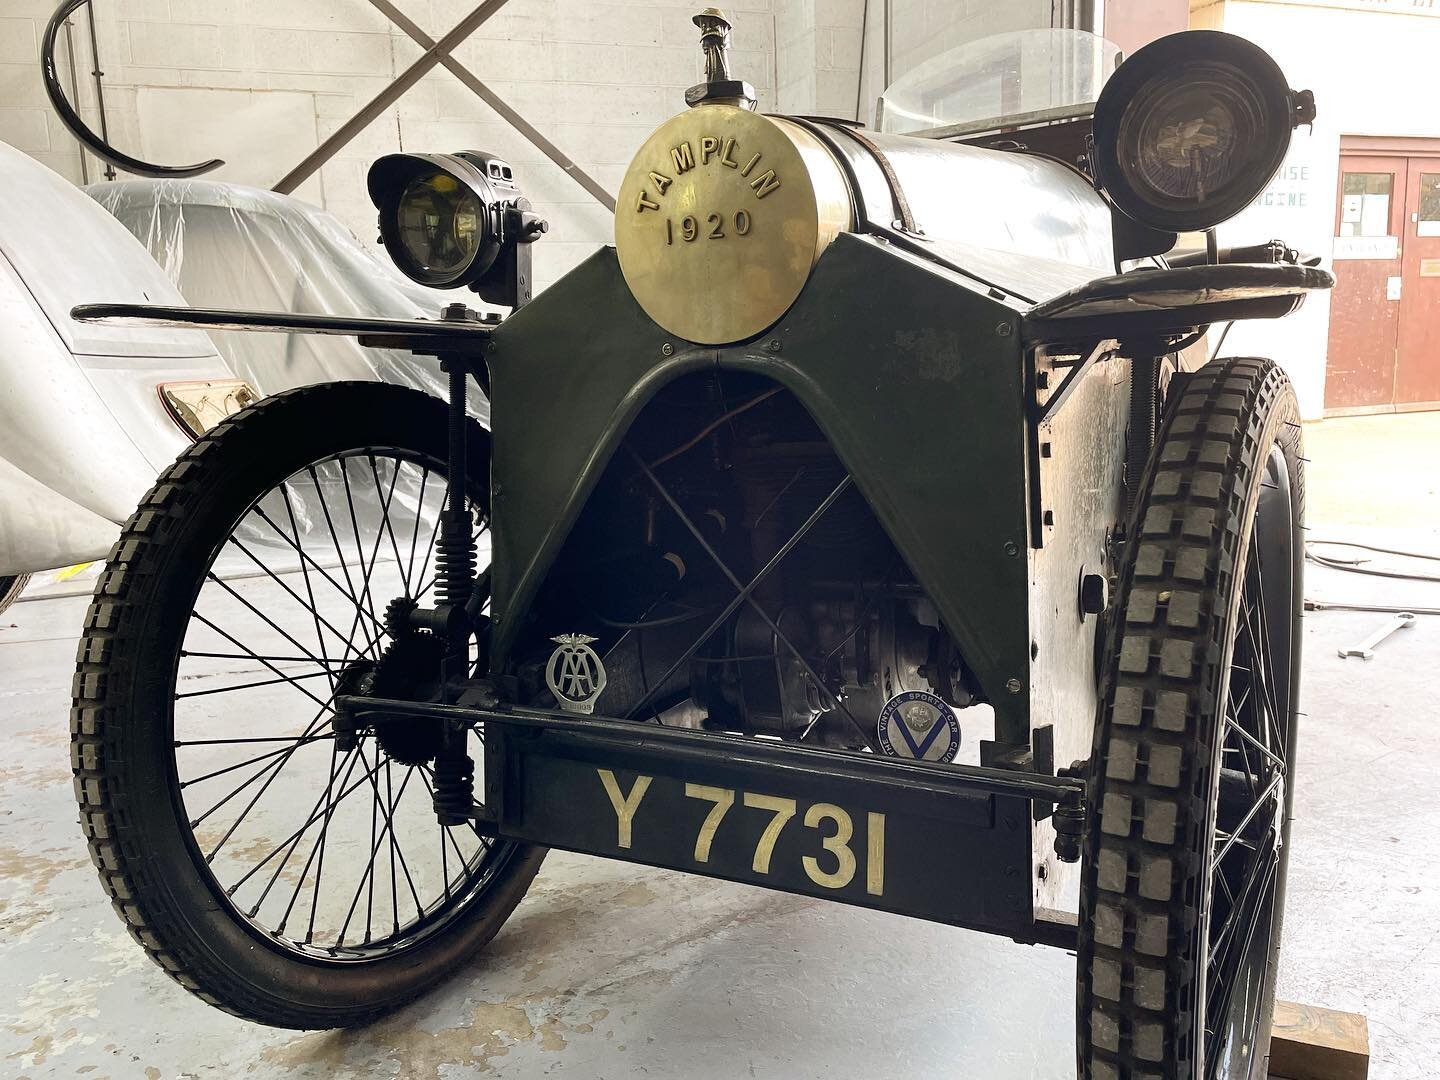 Preparing the 1920 Tamplin for this weekend #akvr_uk #vintagecar #vscc #japengine #tamplin #beltdriven #cyclecar #cyclecars #1920